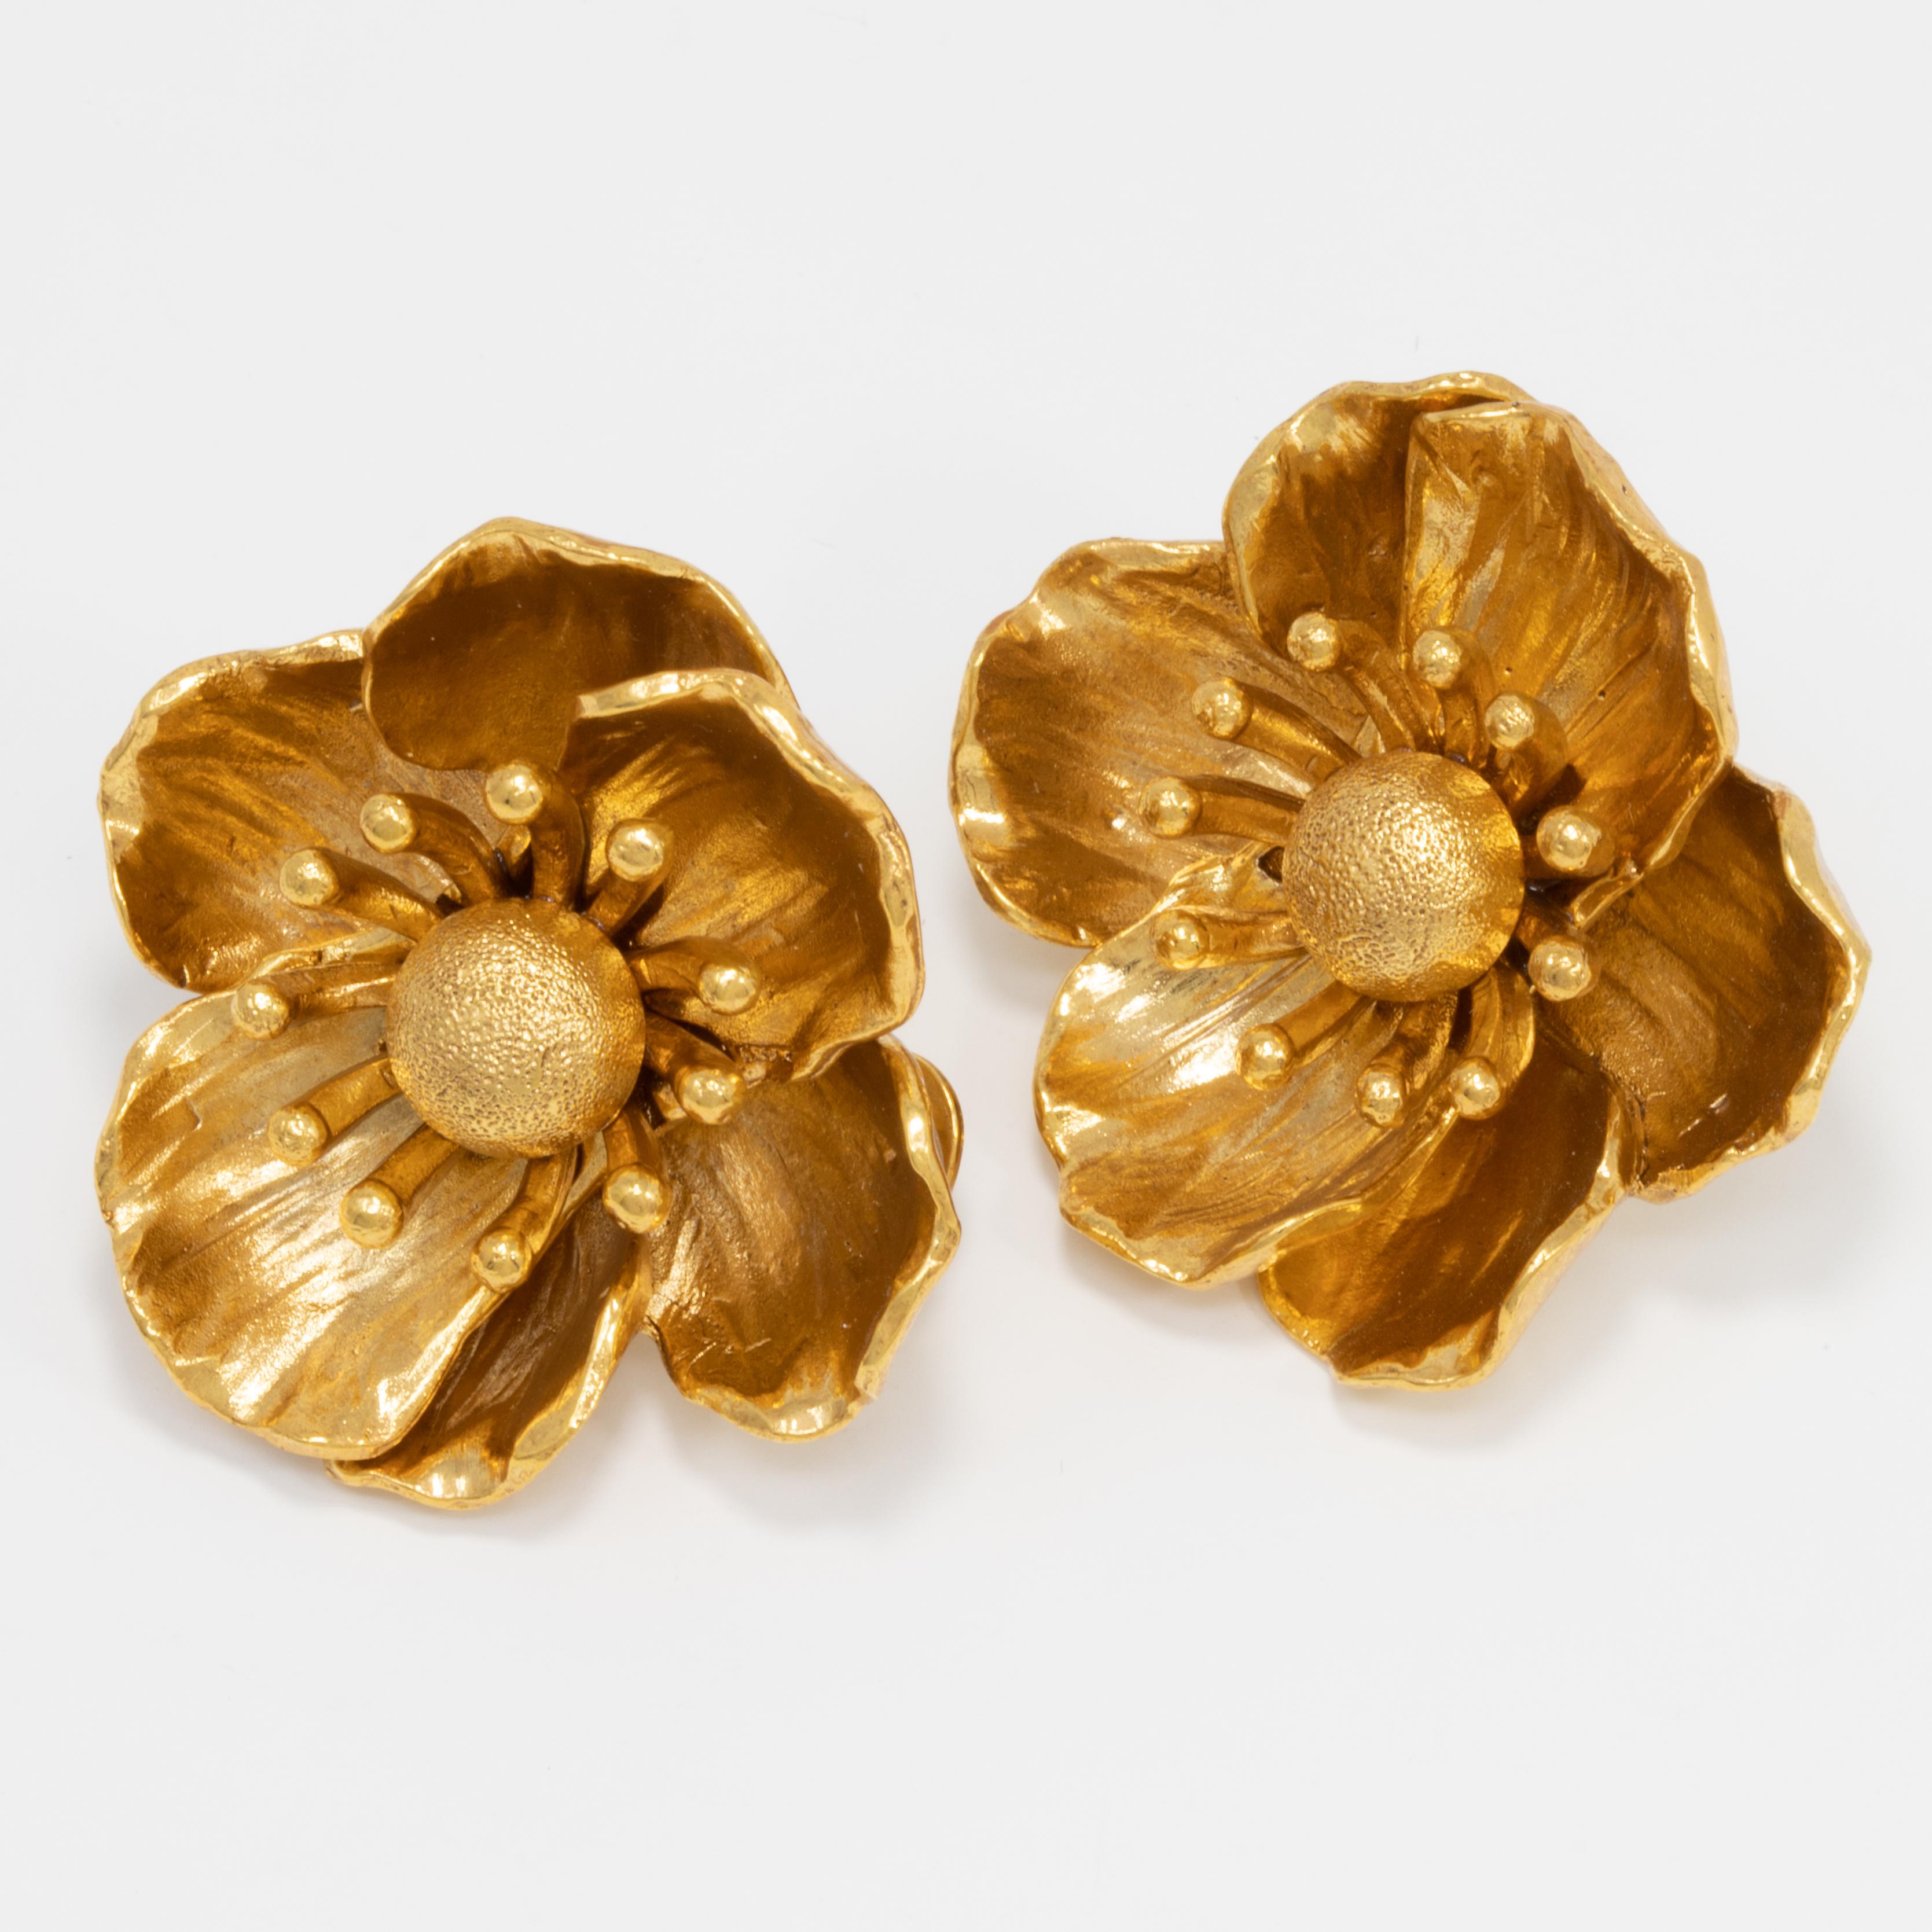 Poppy flower clip on earrings by Oscar de la Renta. Poppy silhouette with brushed golden finish.

Gold-plated.

Tags, Marks, Hallmarks: Oscar de la Renta, Made in USA
